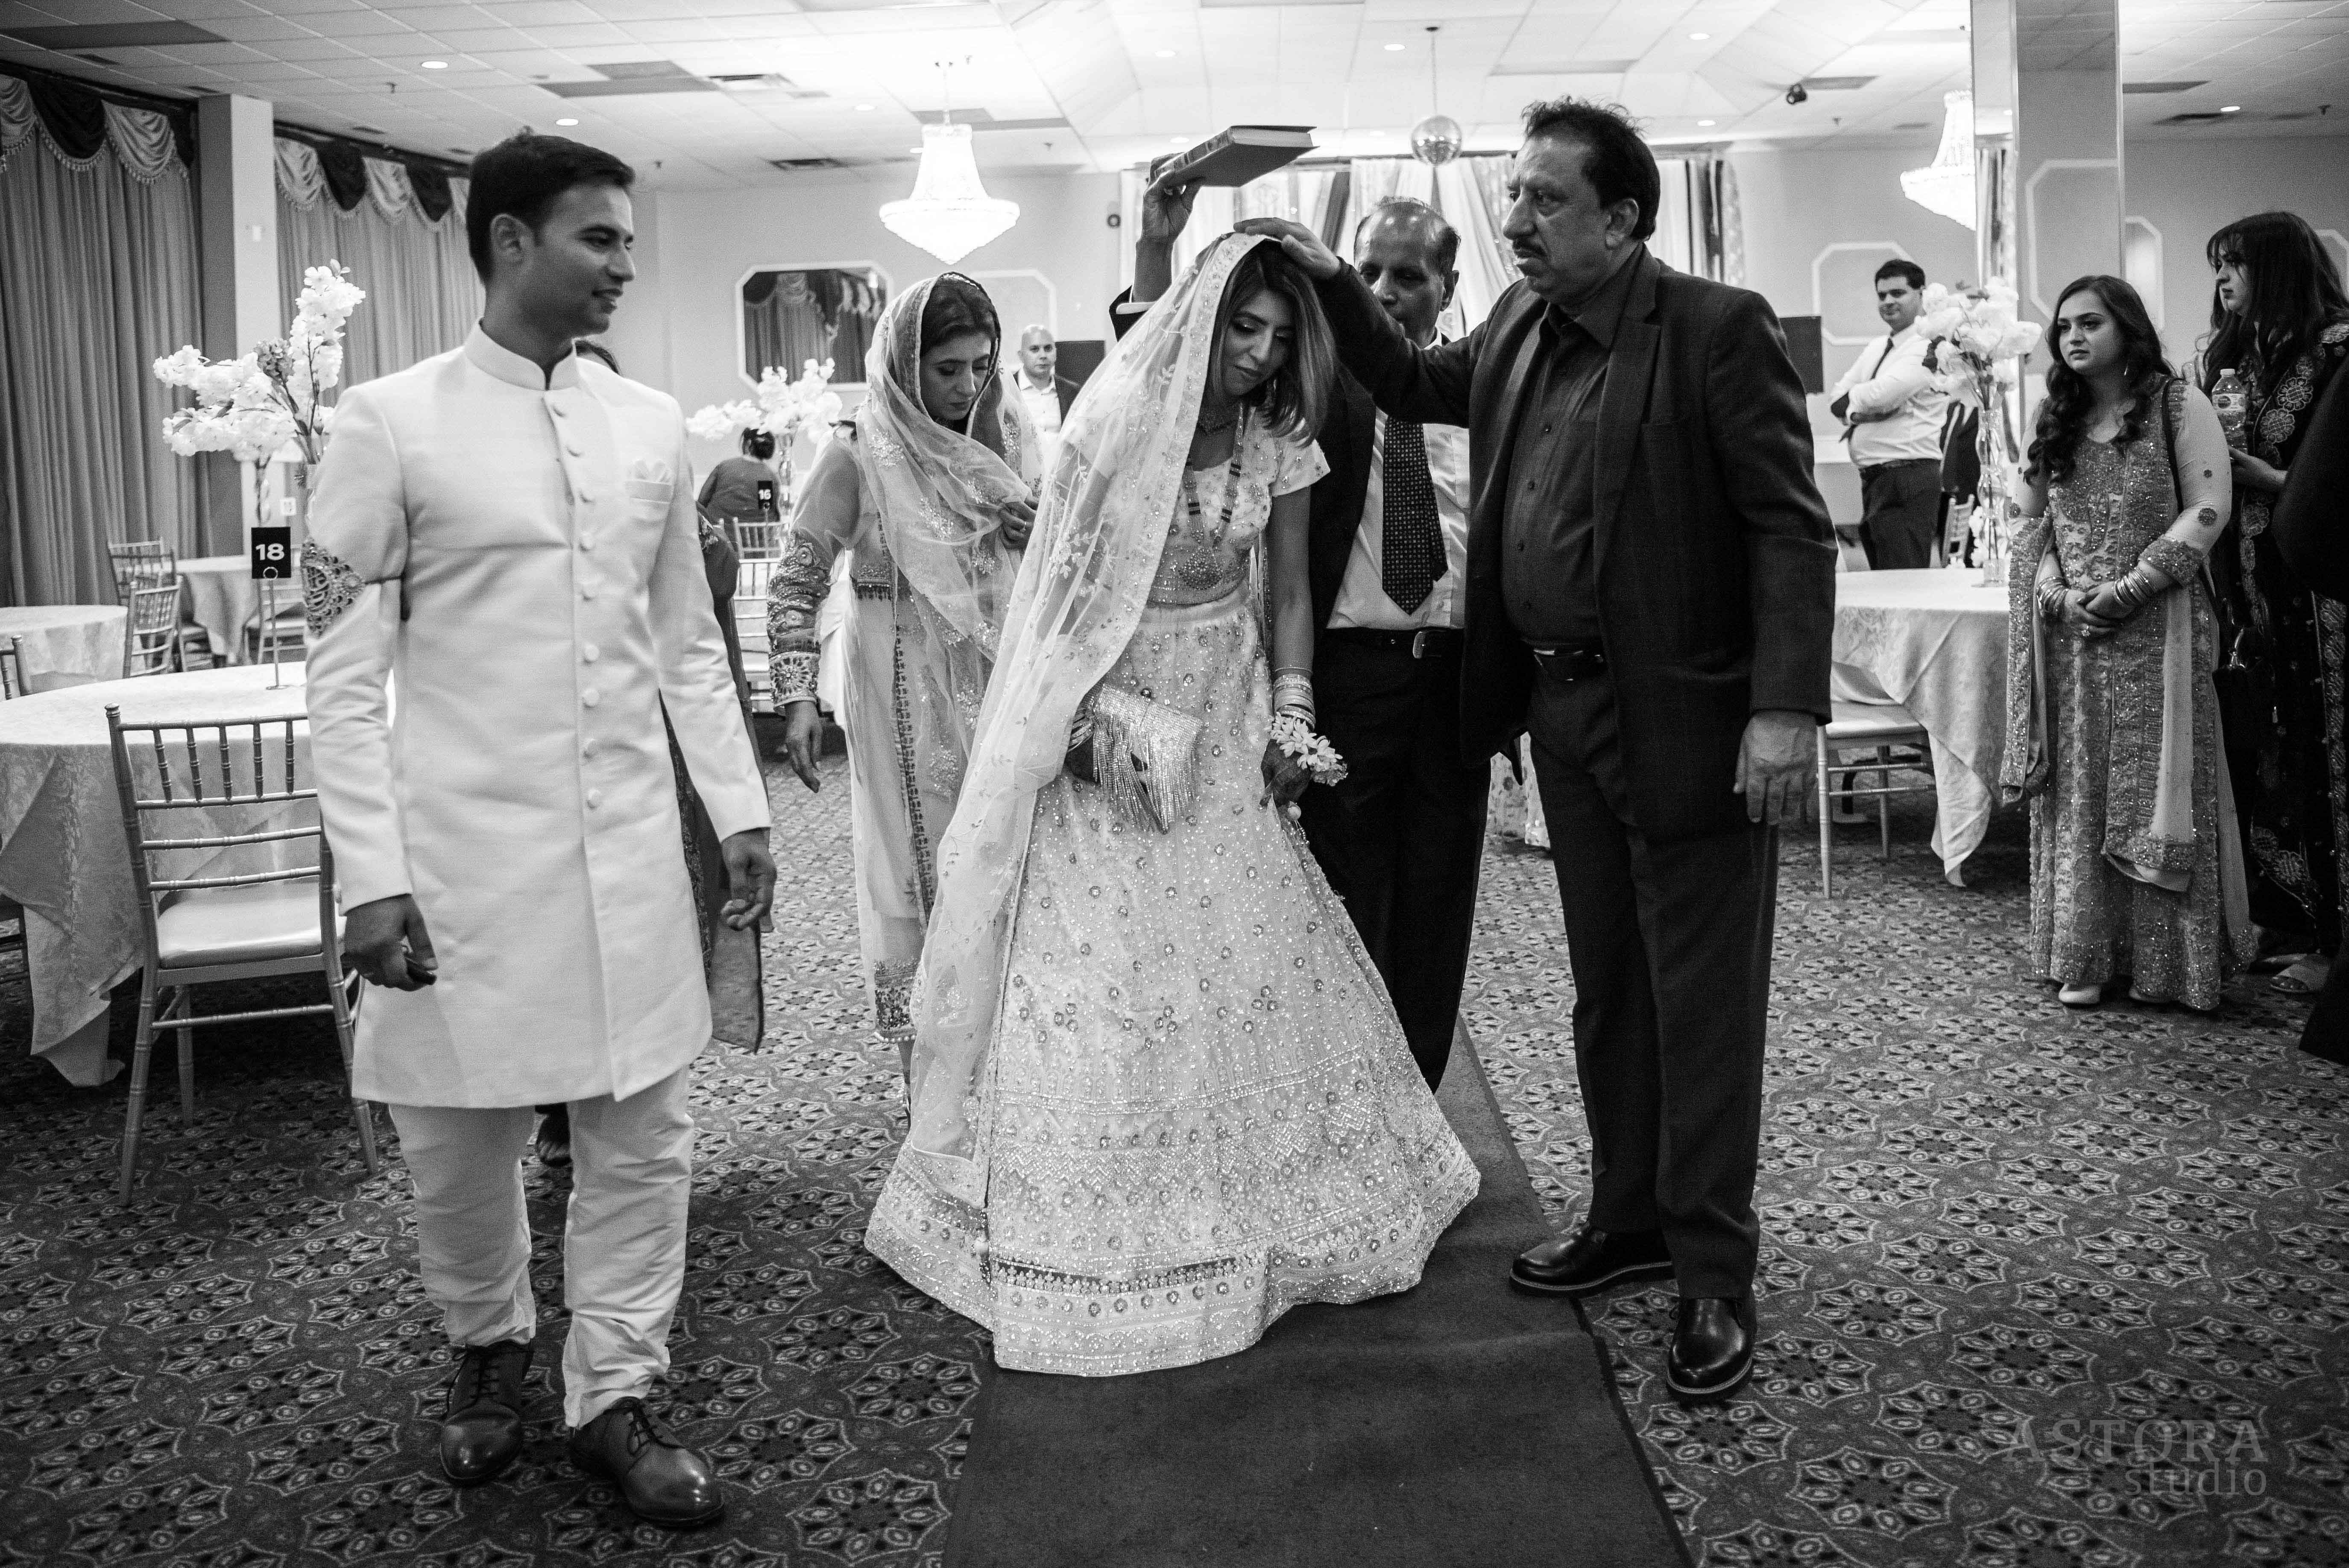 traditional South Asian marriage photography Toronto | Astora Studio